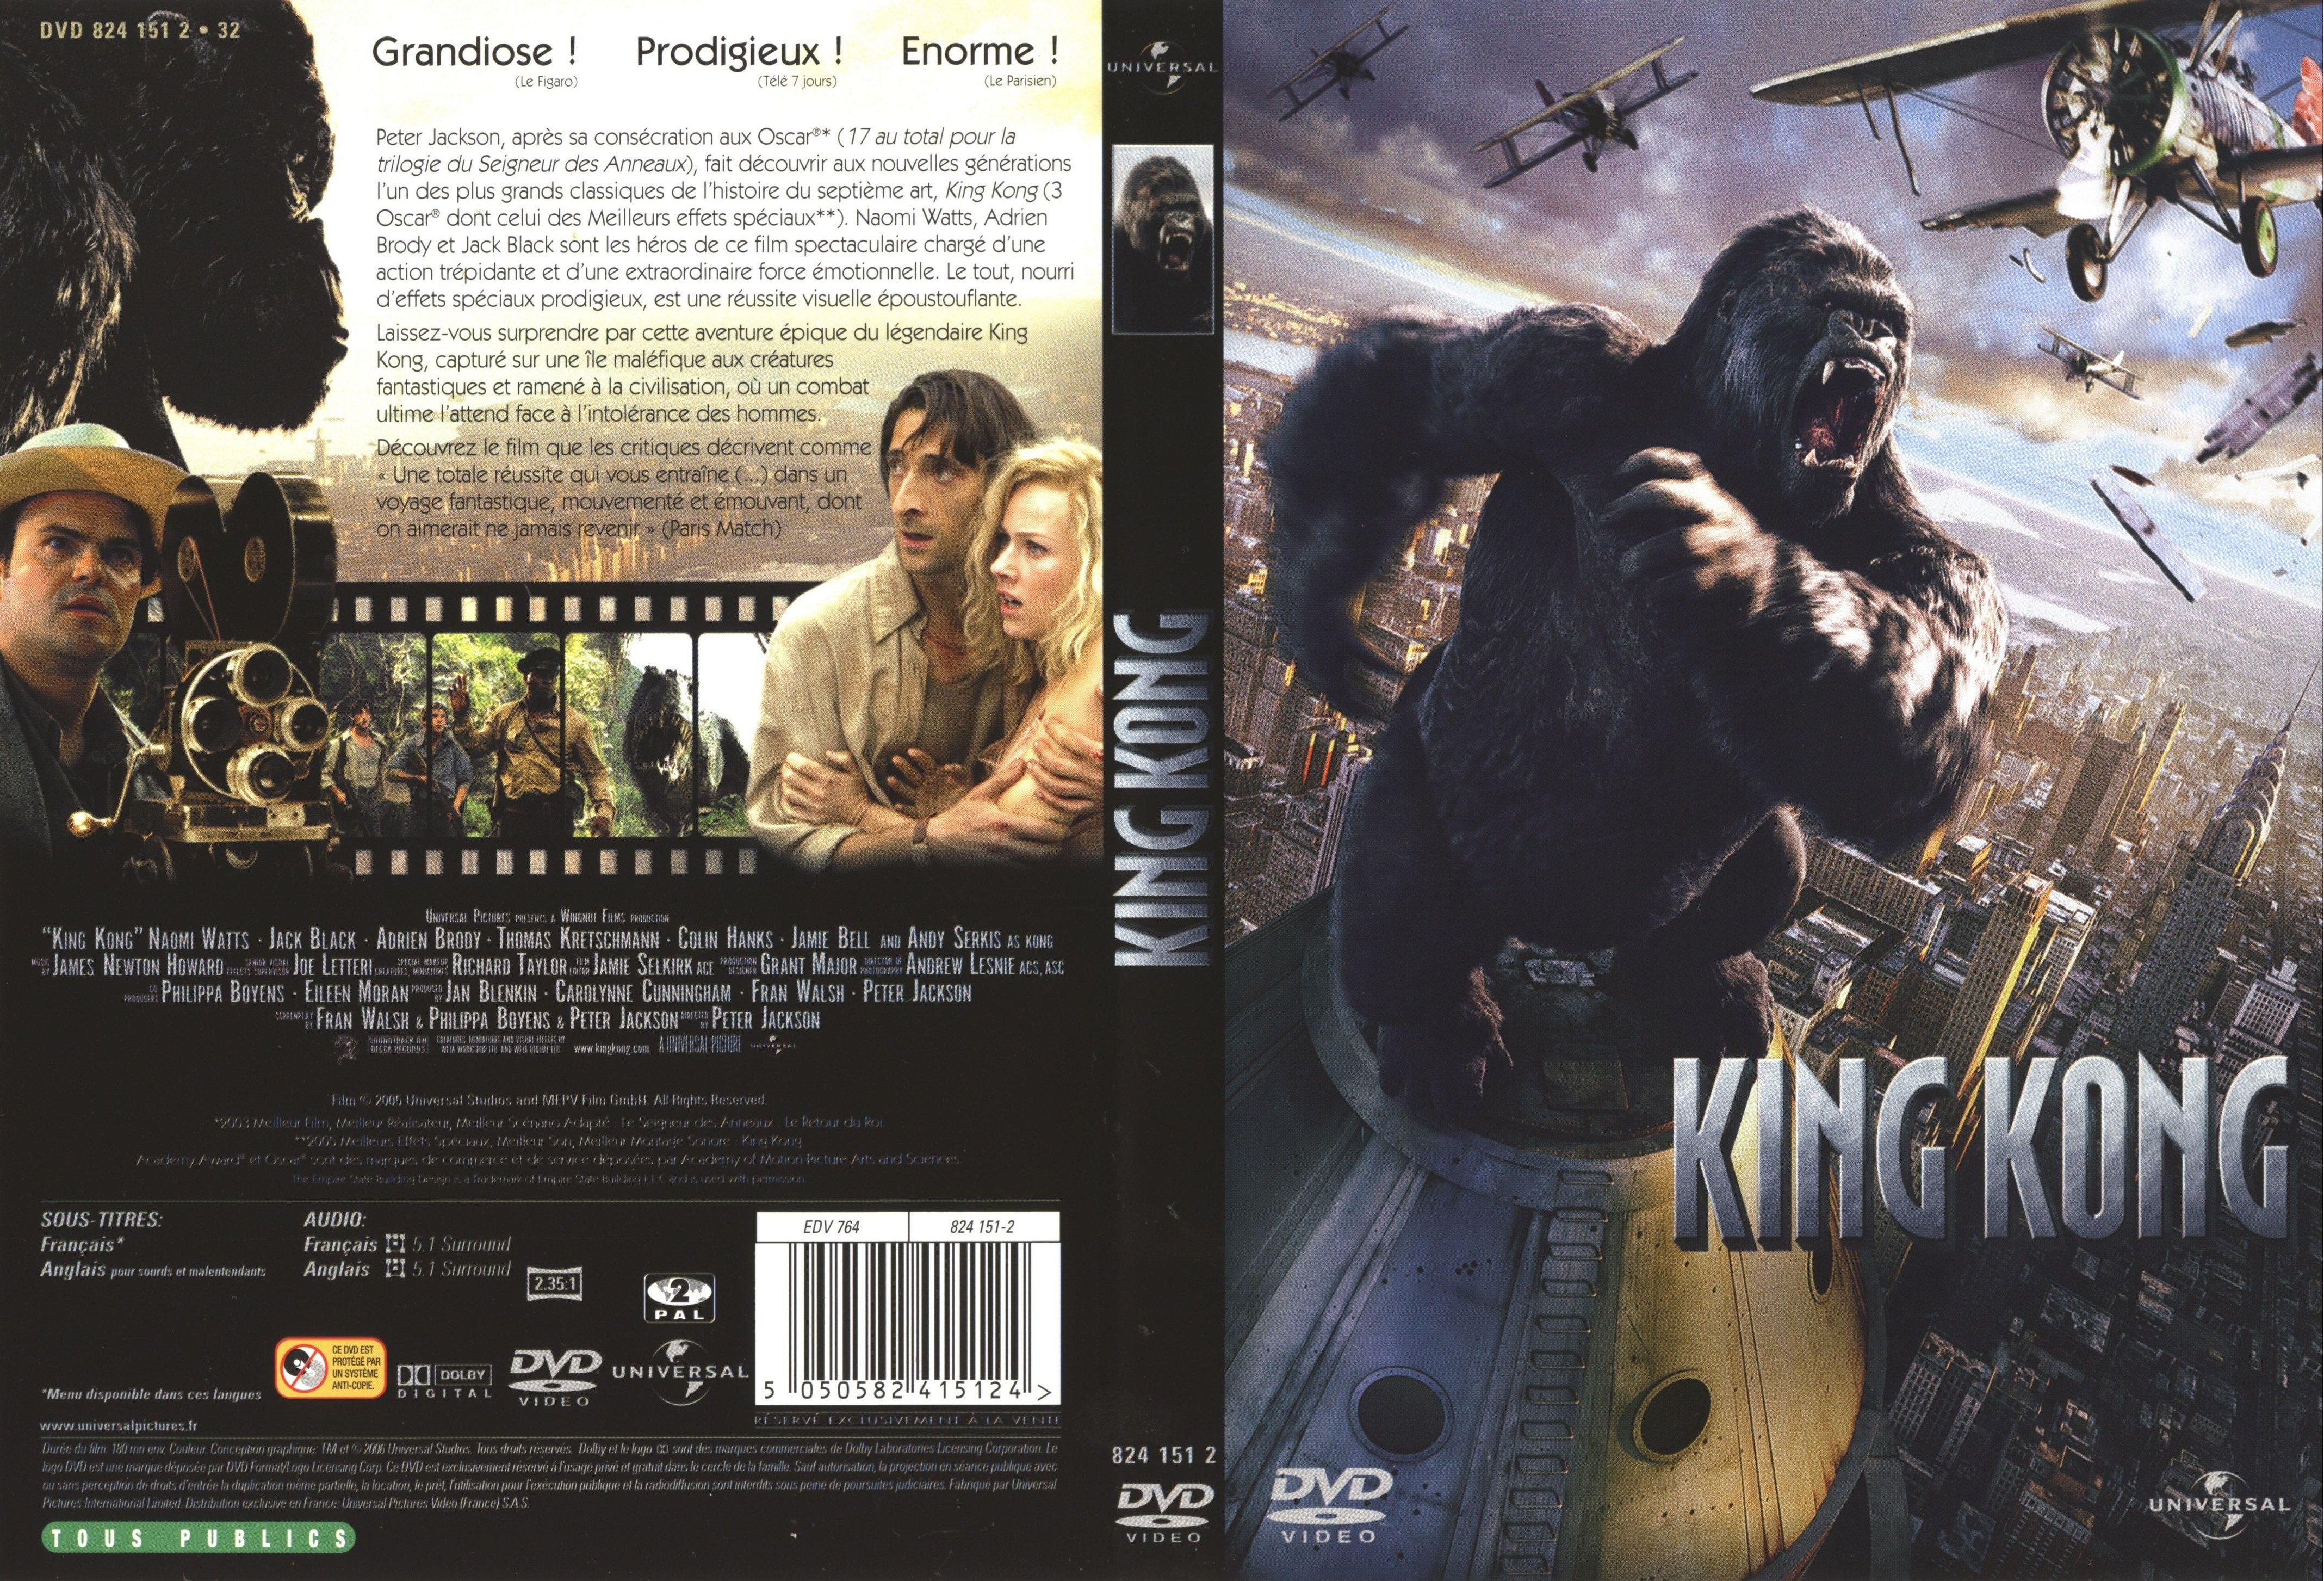 Jaquette DVD King kong 2005